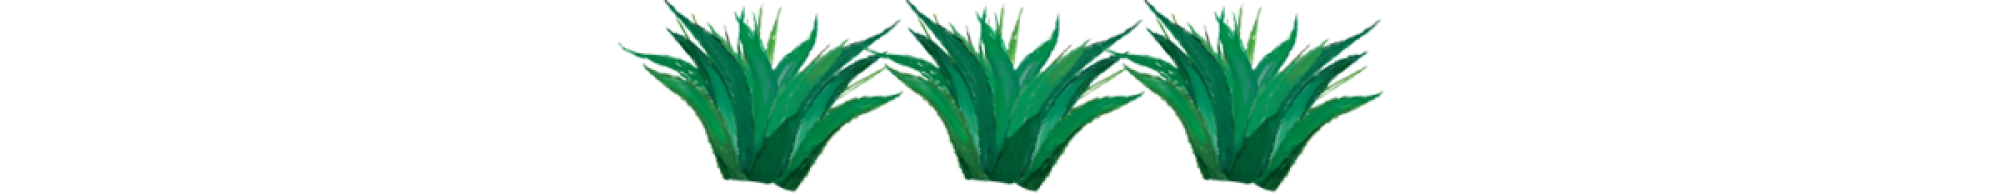 Illustration of agave